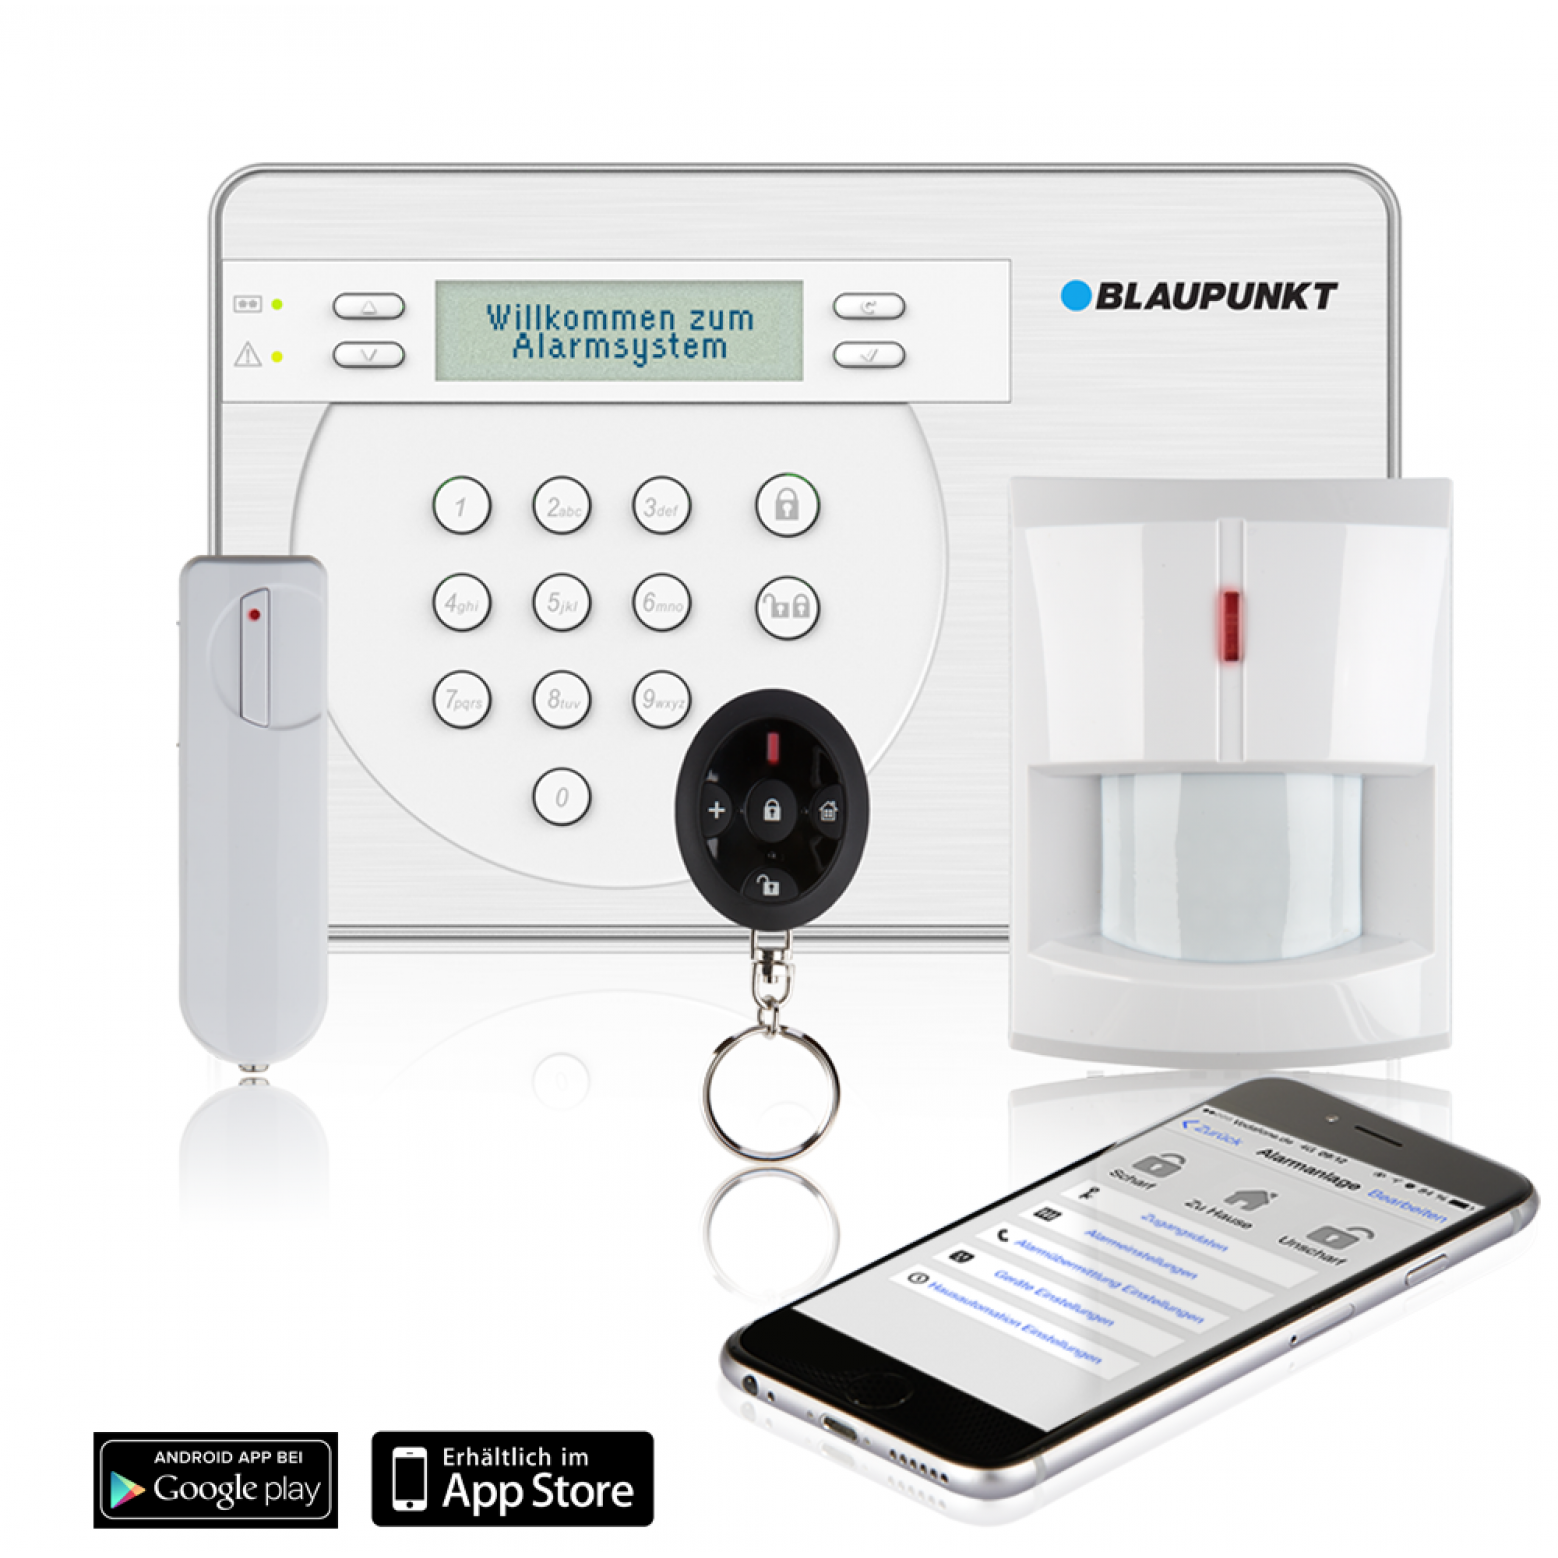 Blaupunkt SA2900-R Smart GSM Draadloos Alarmsysteem